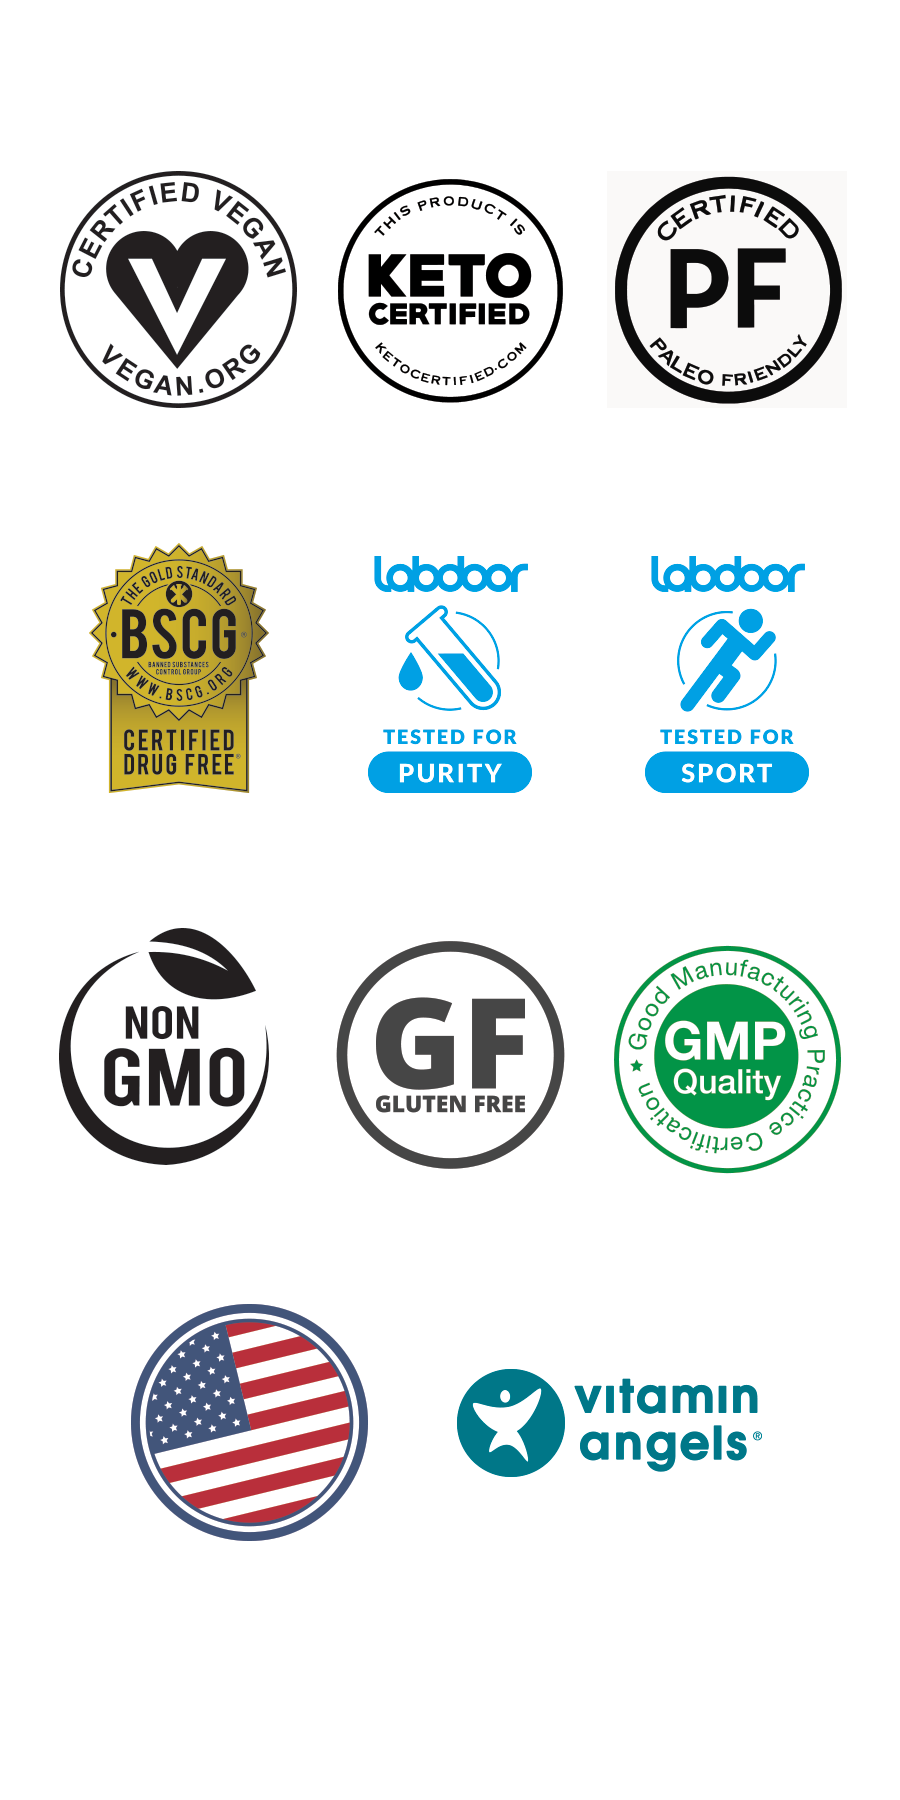 Certifications and Test Icons - Vegan, Keto, Paleo, BSCG, Labdoor, Non-GMO, Gluten Free, cGMP, USA, and Vitamin Angels